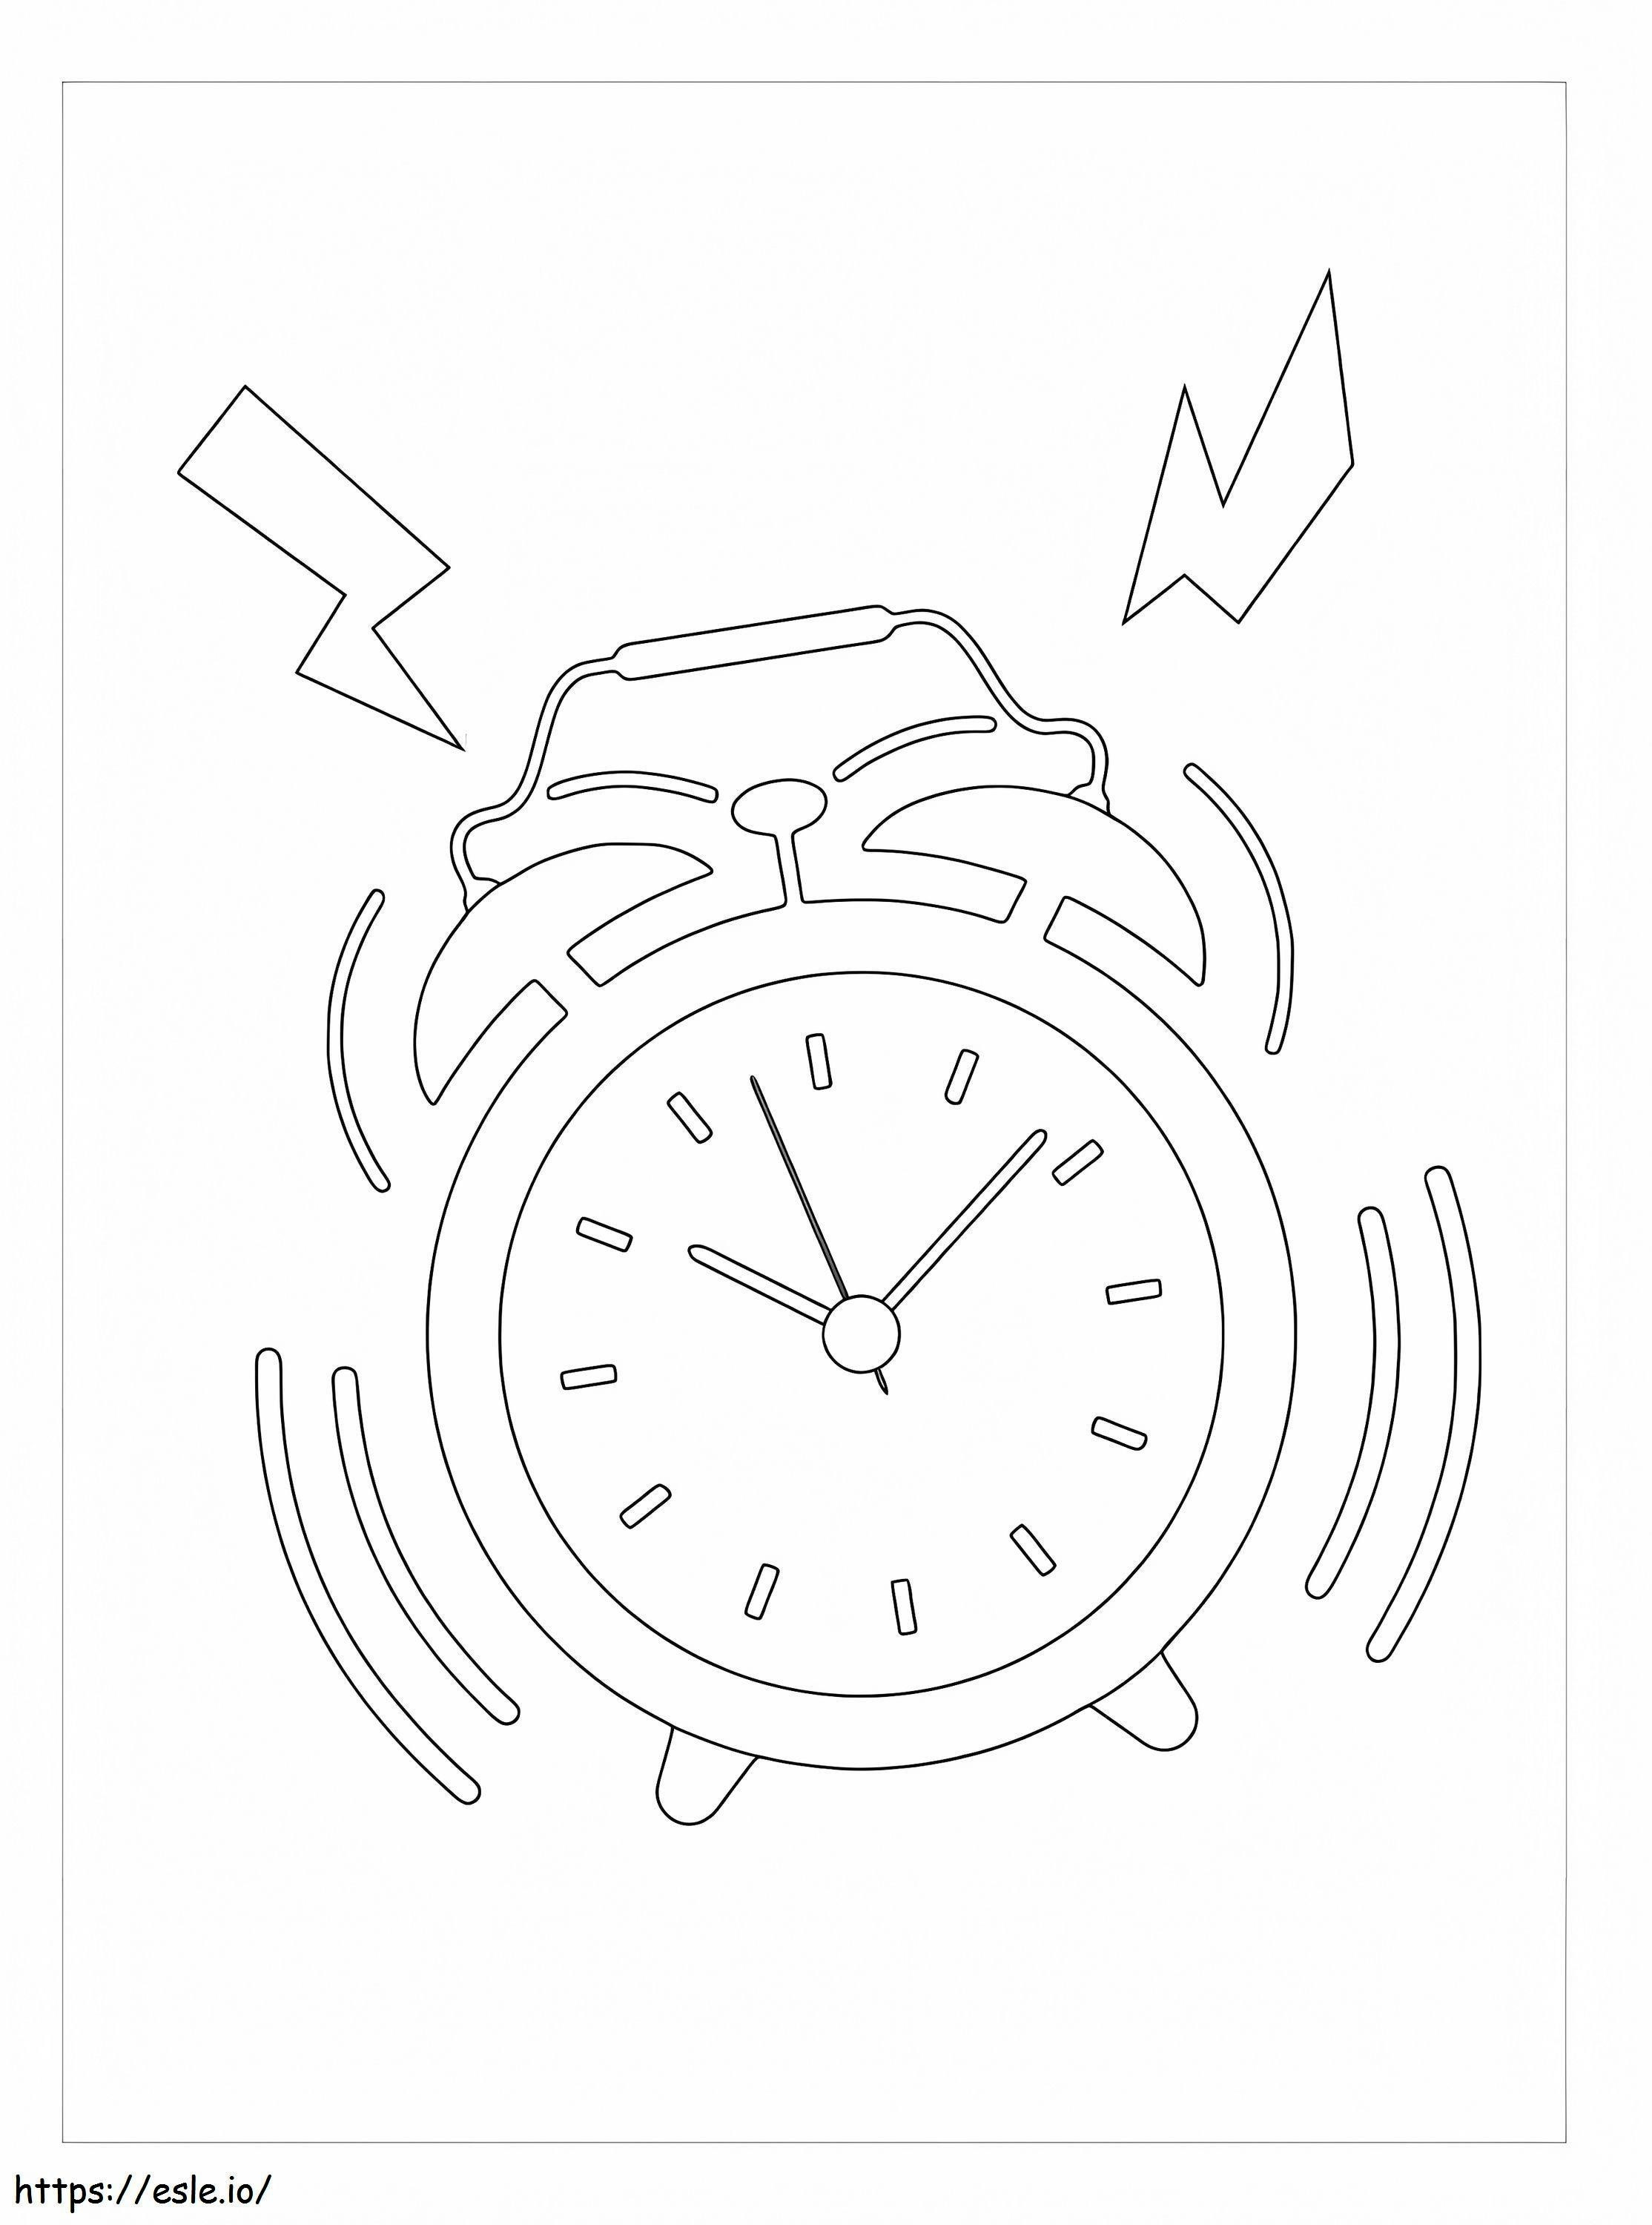 Basic Alarm Clock coloring page